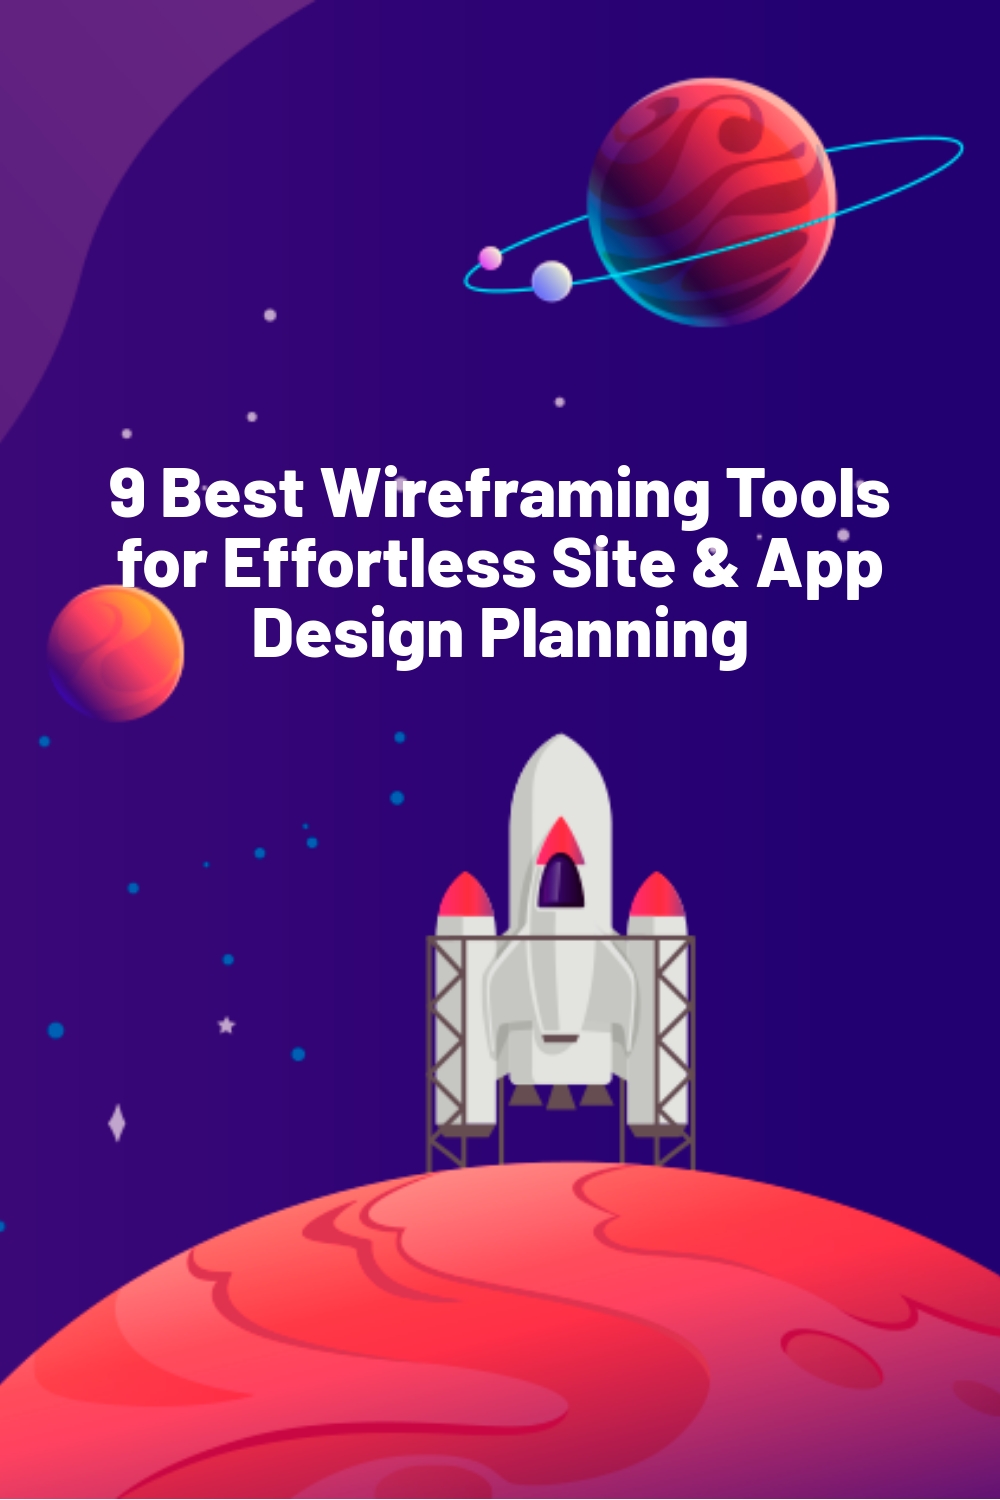 9 Best Wireframing Tools for Effortless Site & App Design Planning